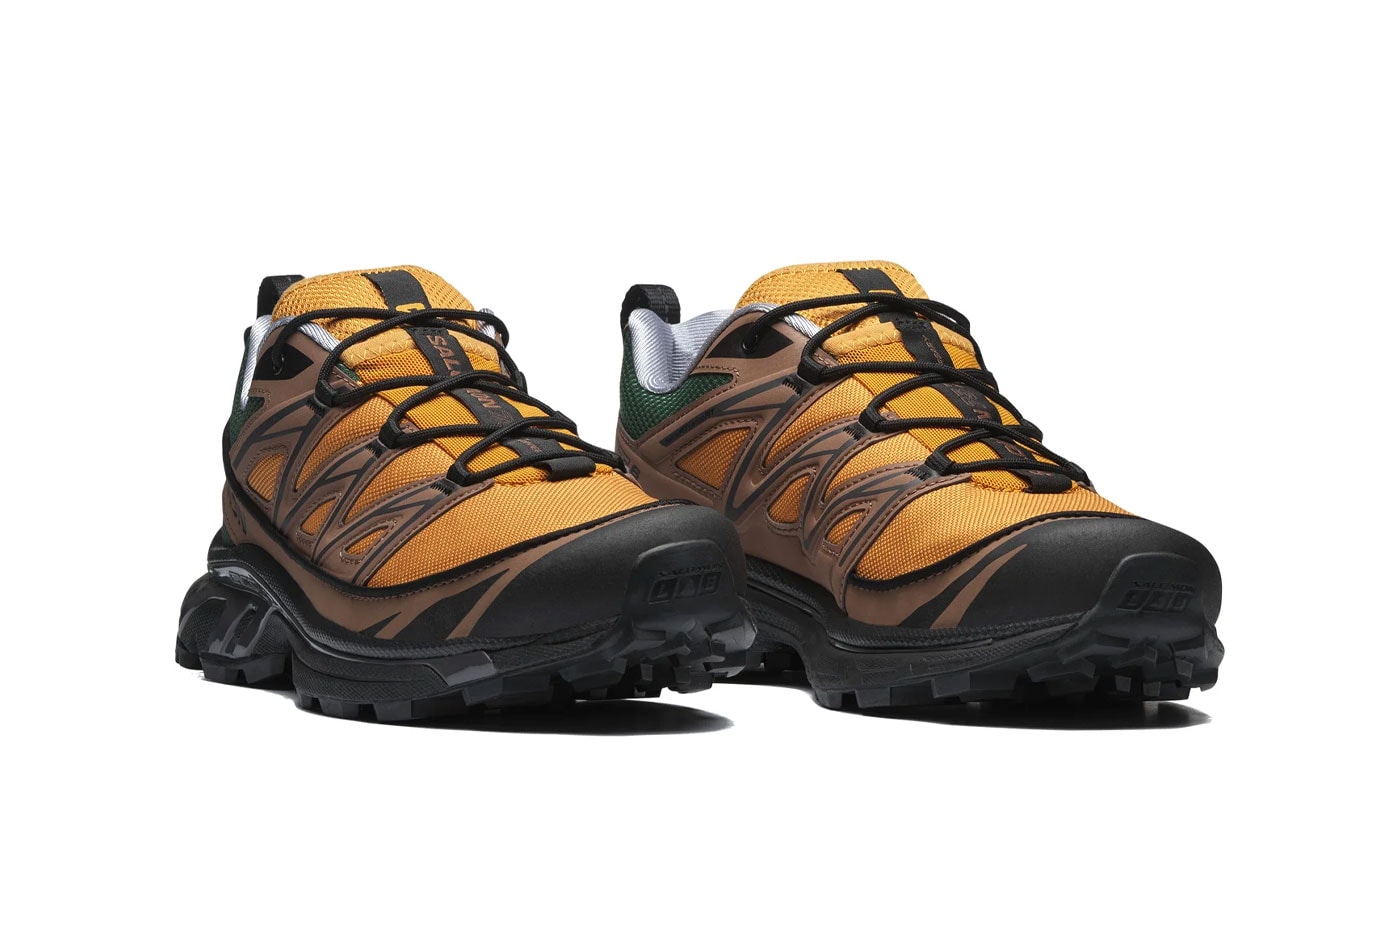 Salomon XT-6 Expanse "75th Anniversary" 417053 Release Info Adventure 7 hiking shoe overkill shop